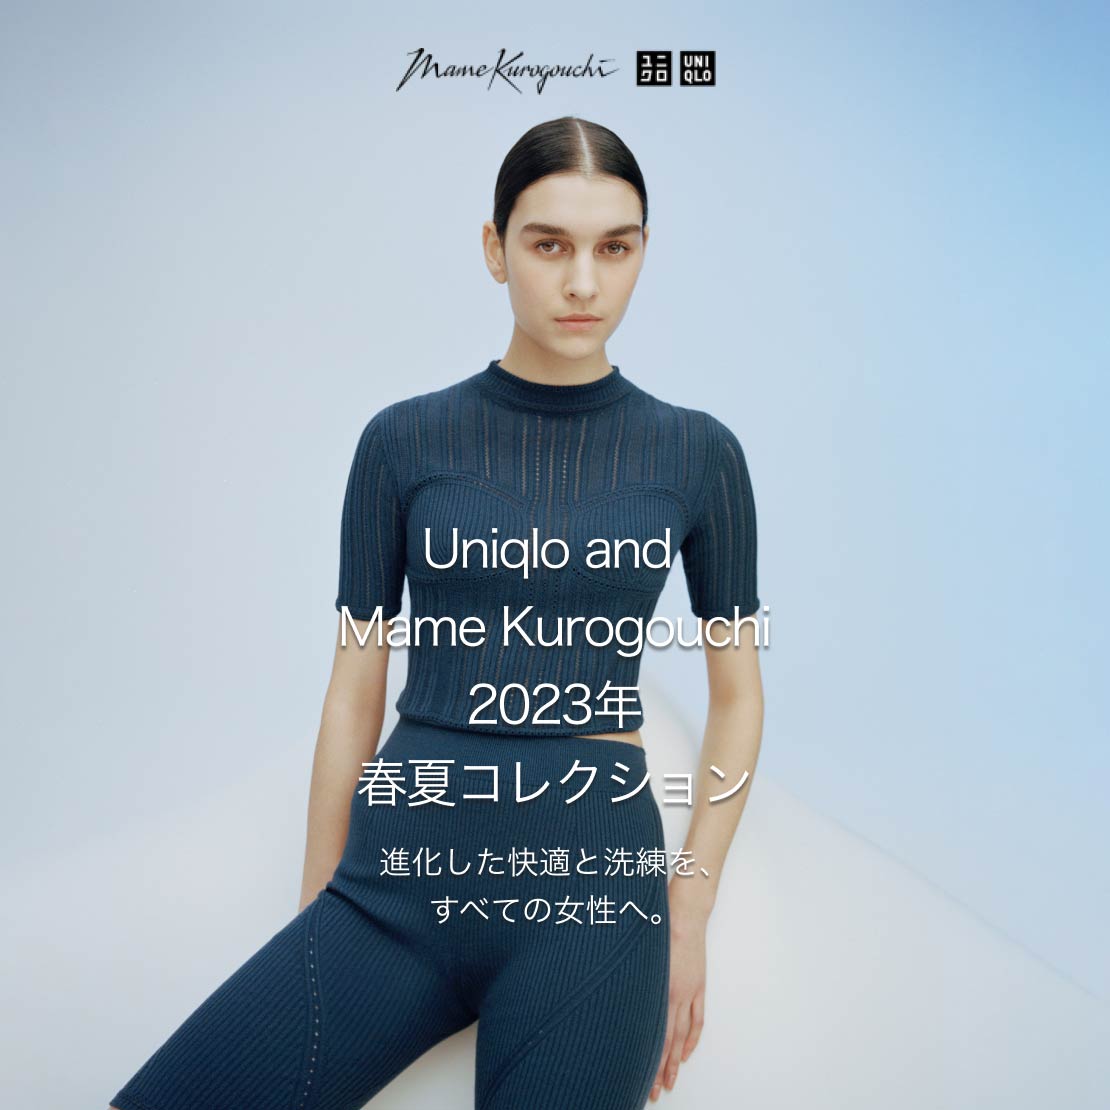 Uniqlo and Mame Kurogouchi 2023年 春夏コレクション
進化した快適と洗練を、すべての女性へ。